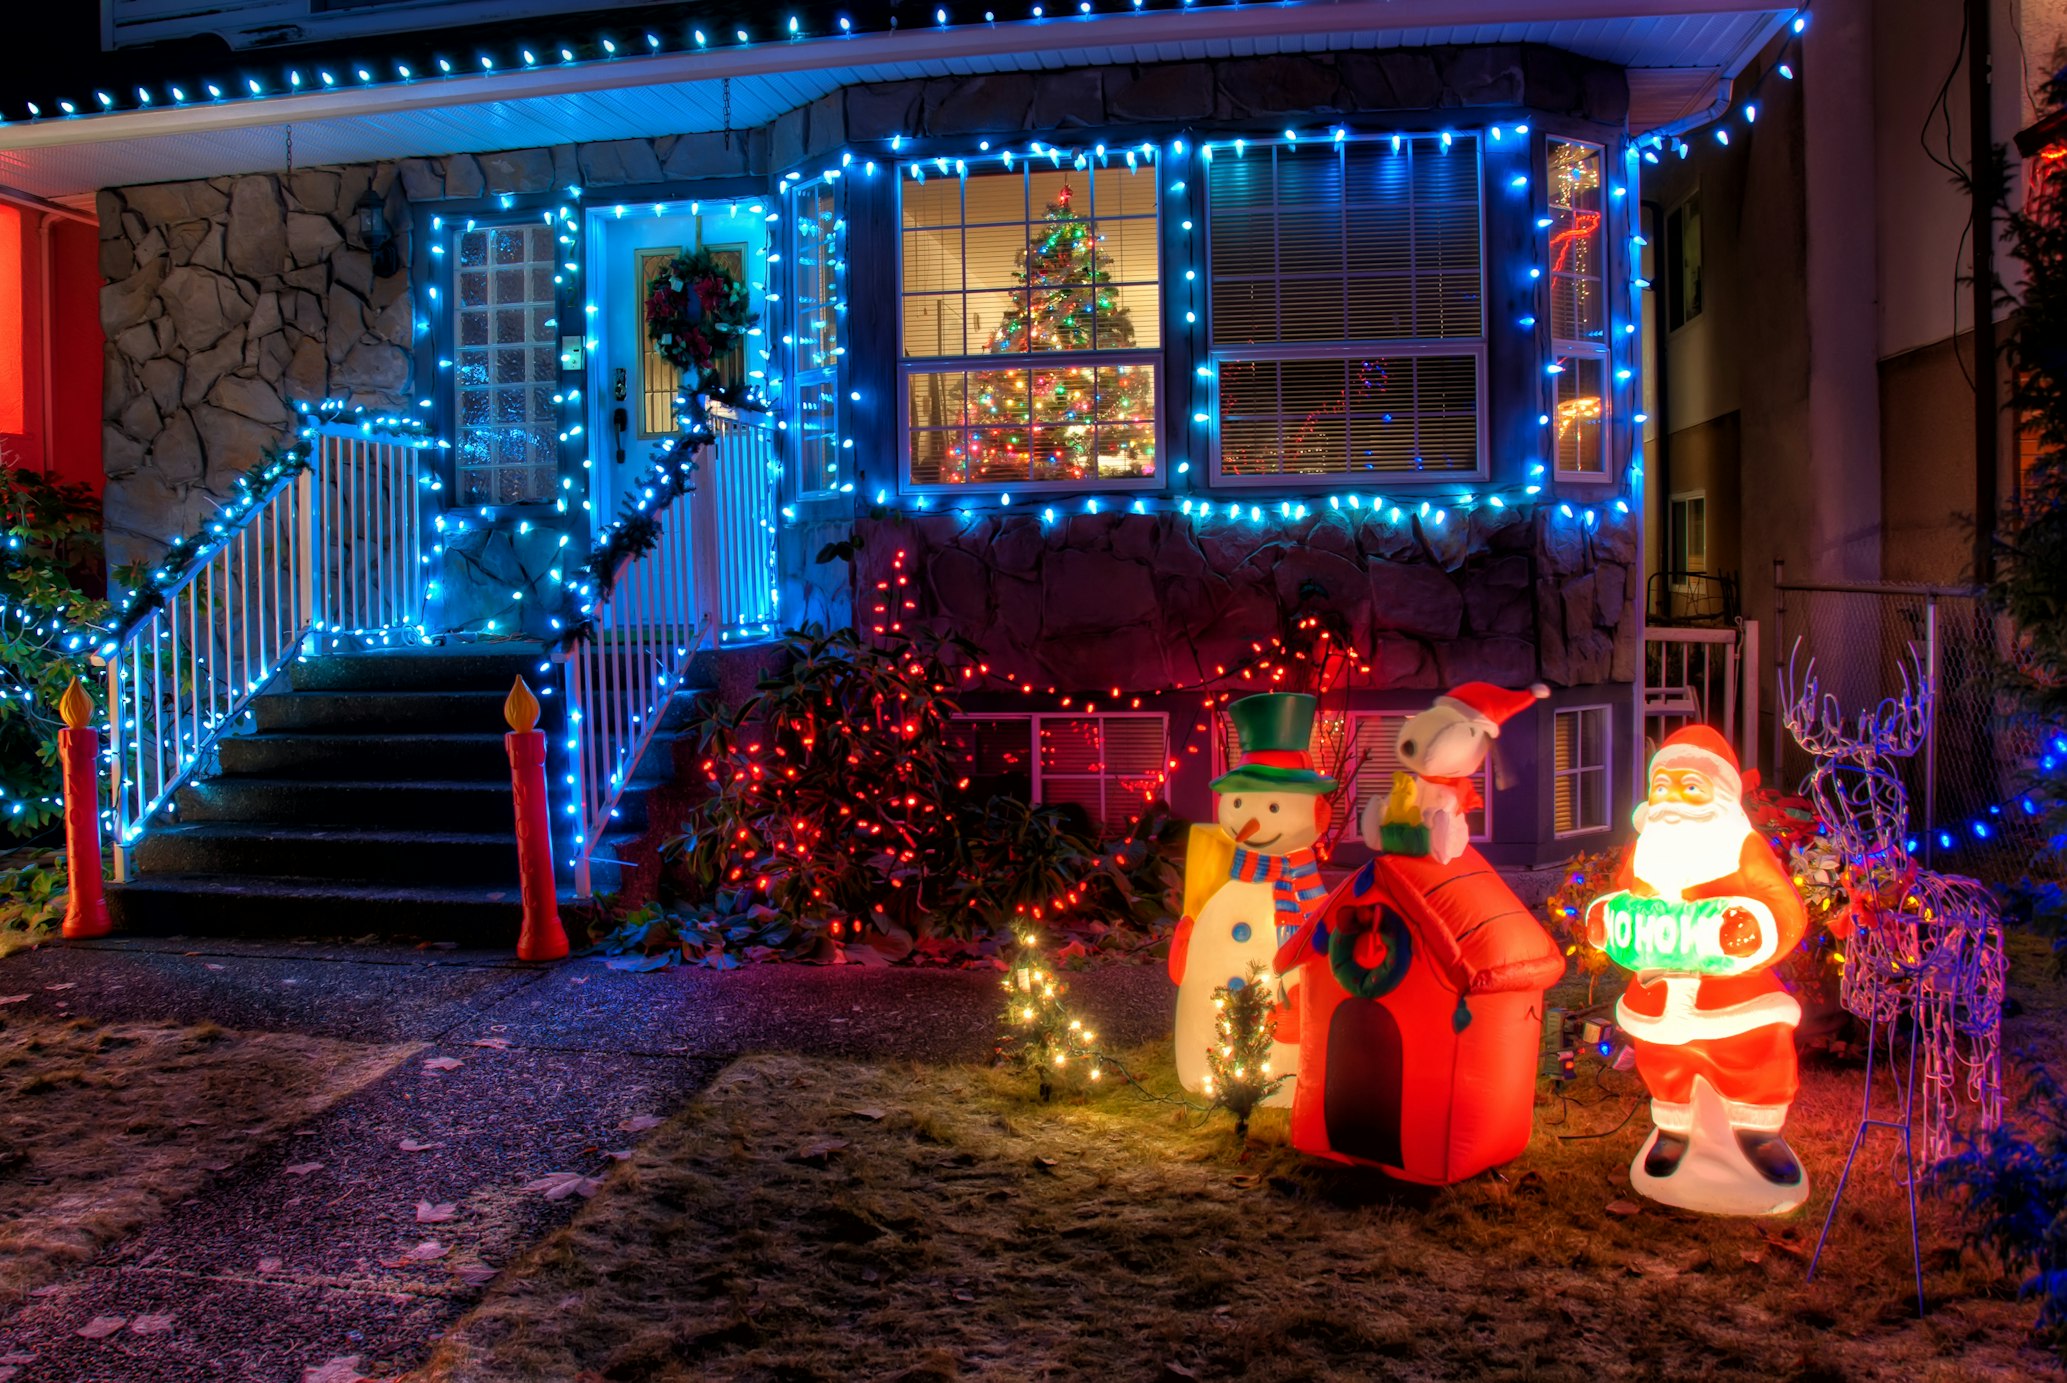 Christmas lights outside a house